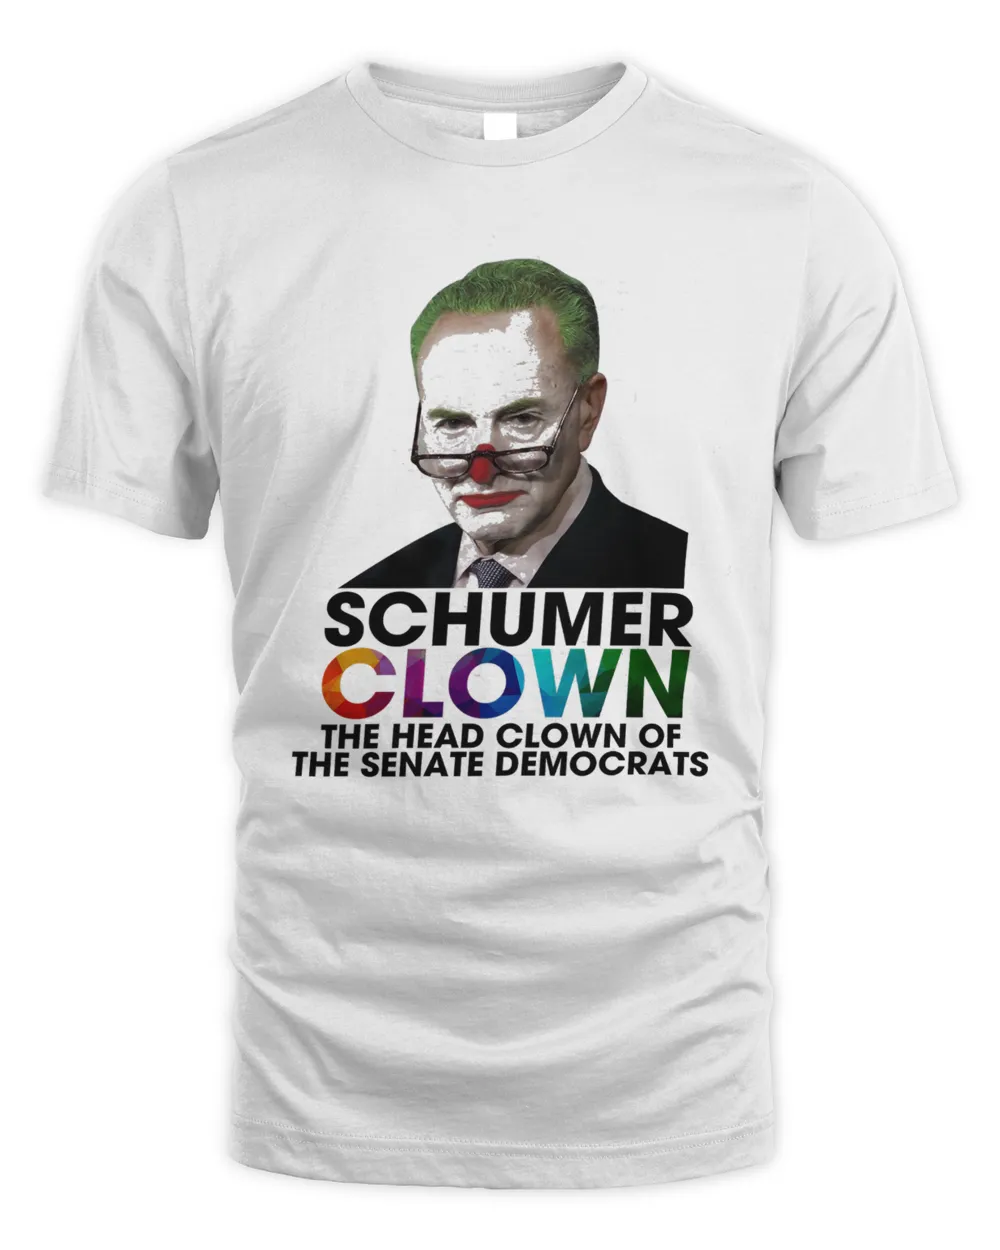 Schumer Clown The Head Clown Of The Senate Democrats Shirt